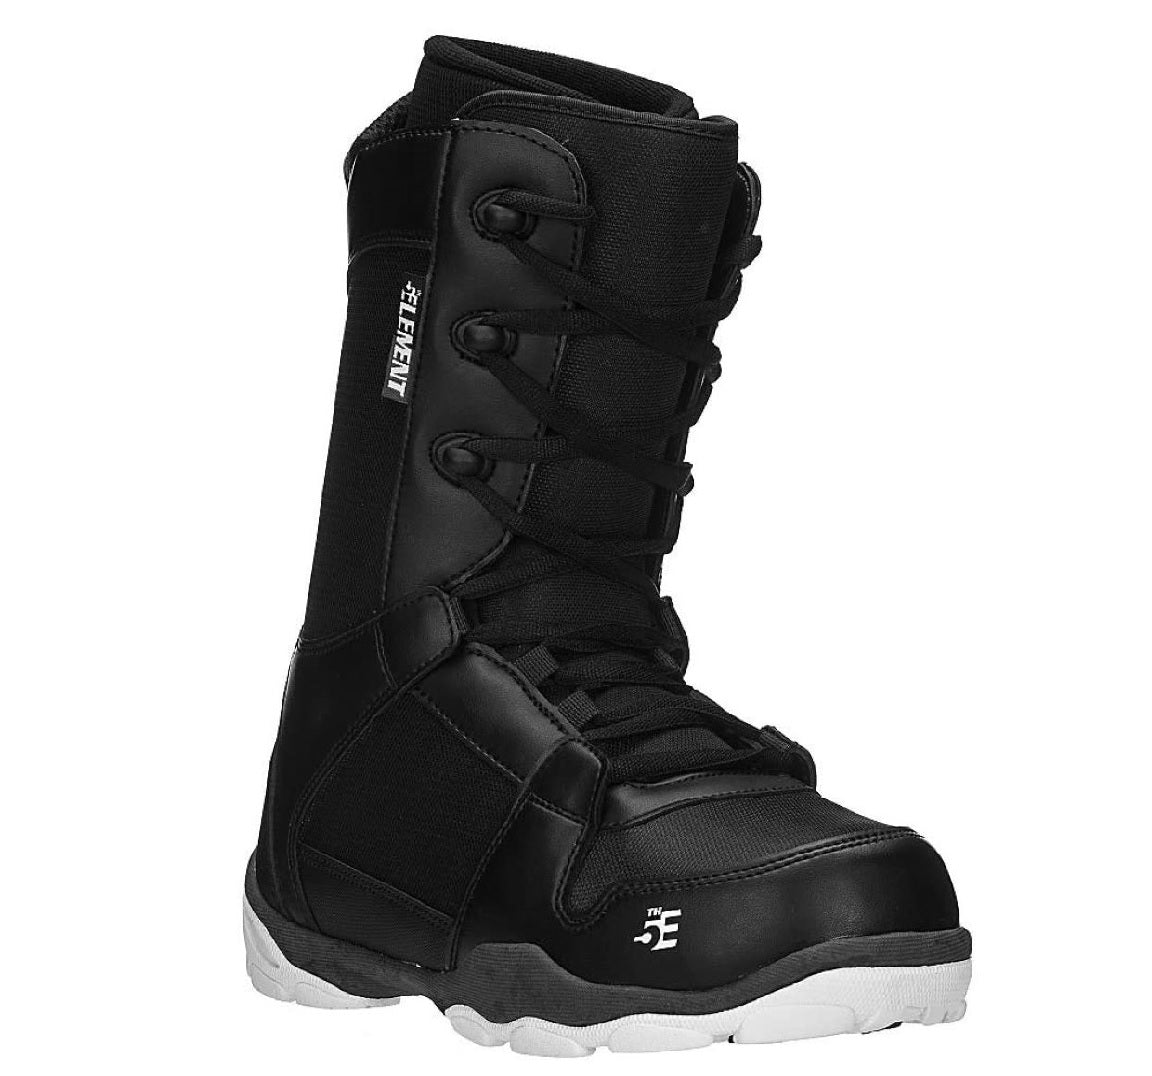 5th Element ST-1 Boots - Black